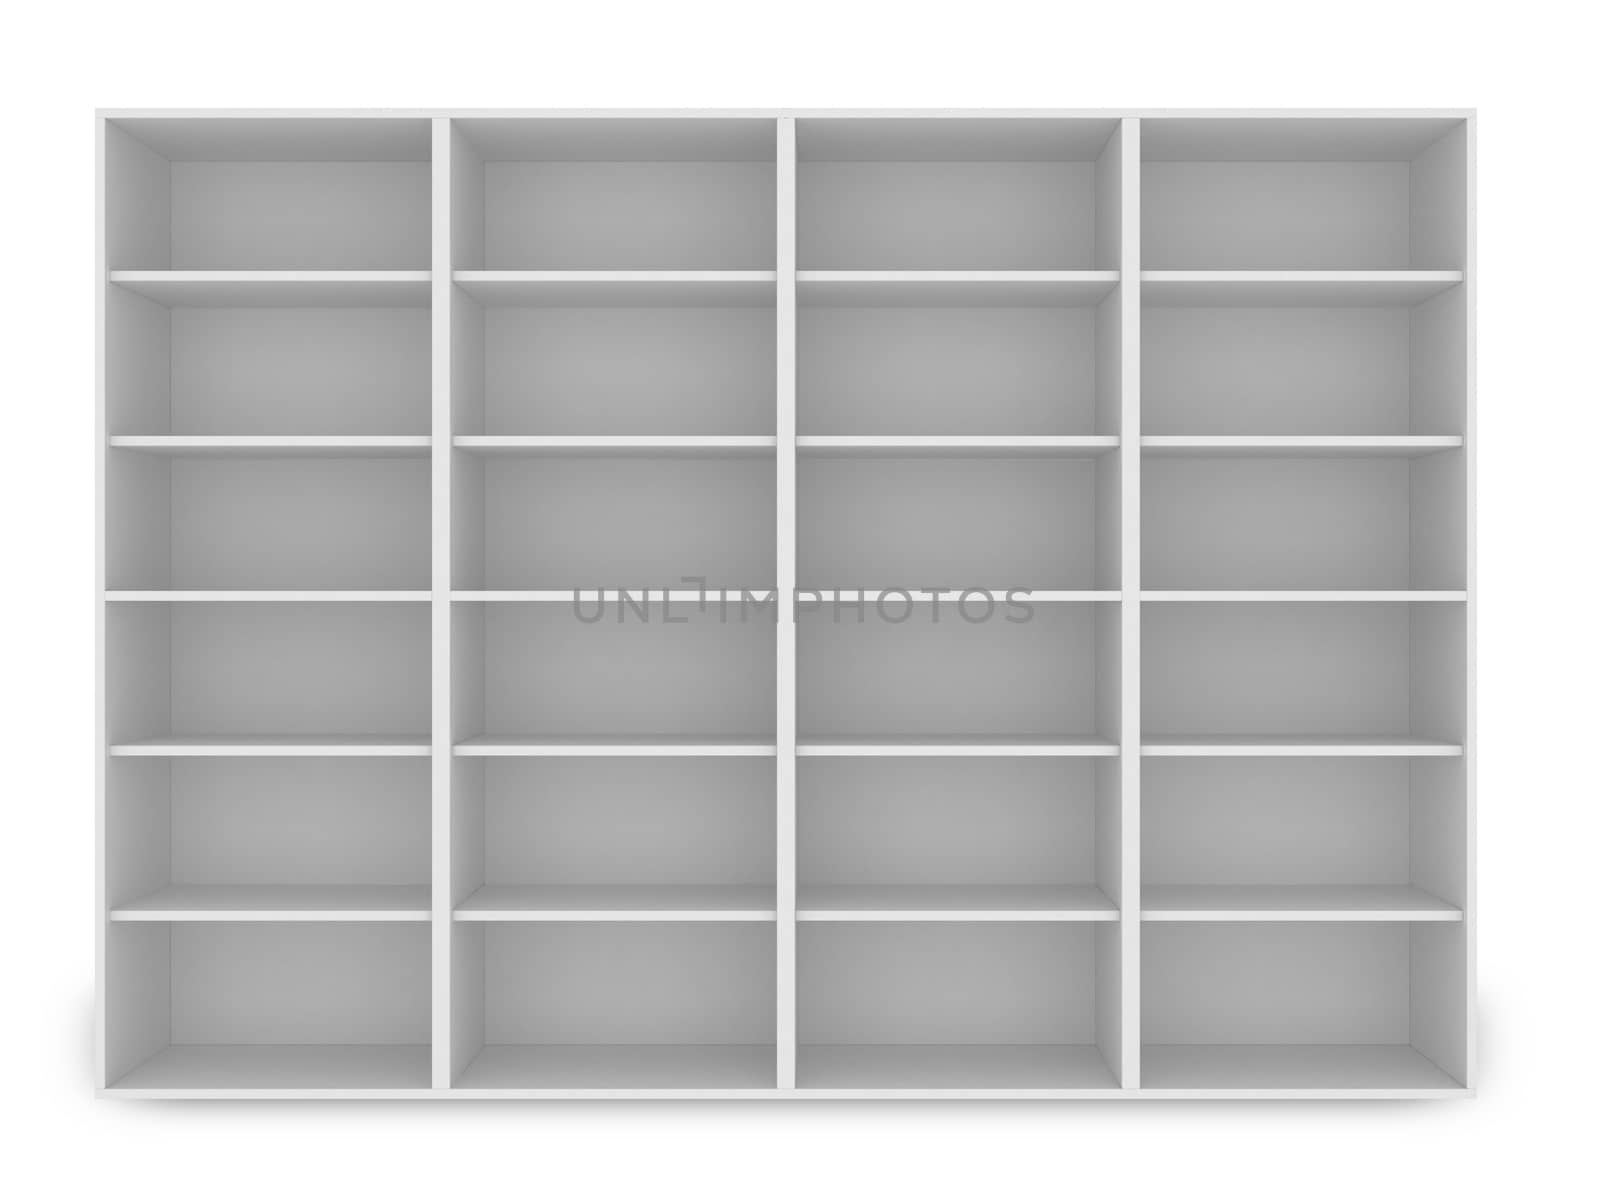 3d white empty shelf space